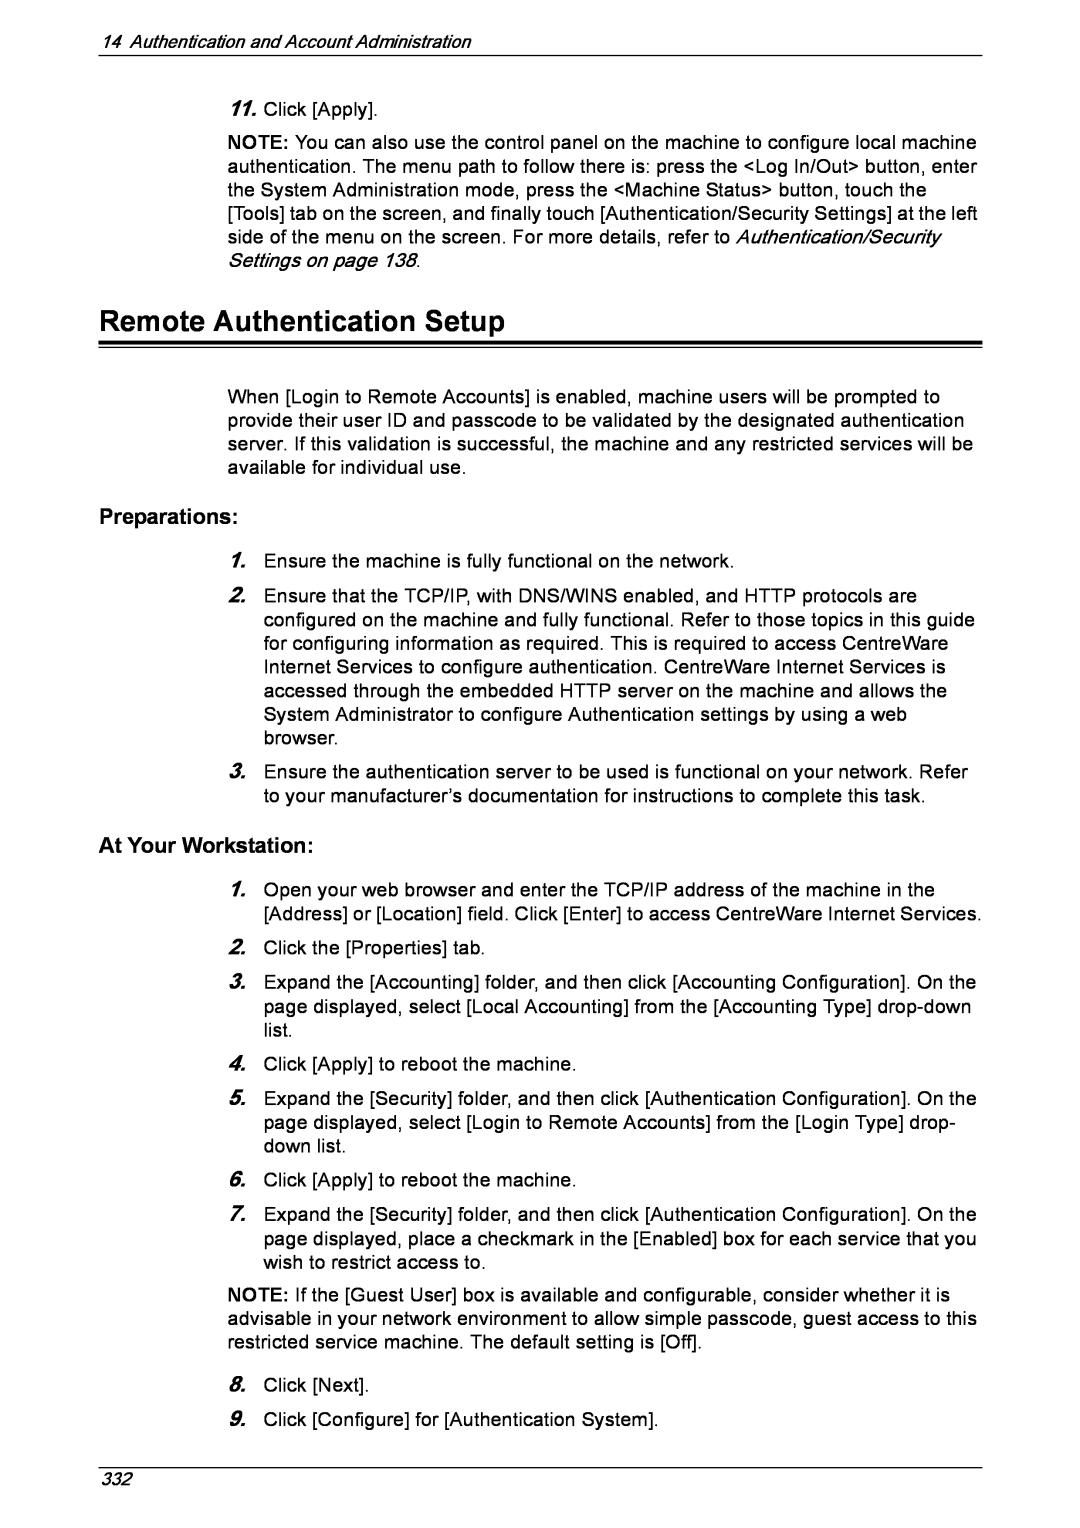 Xerox 5222 manual Remote Authentication Setup 